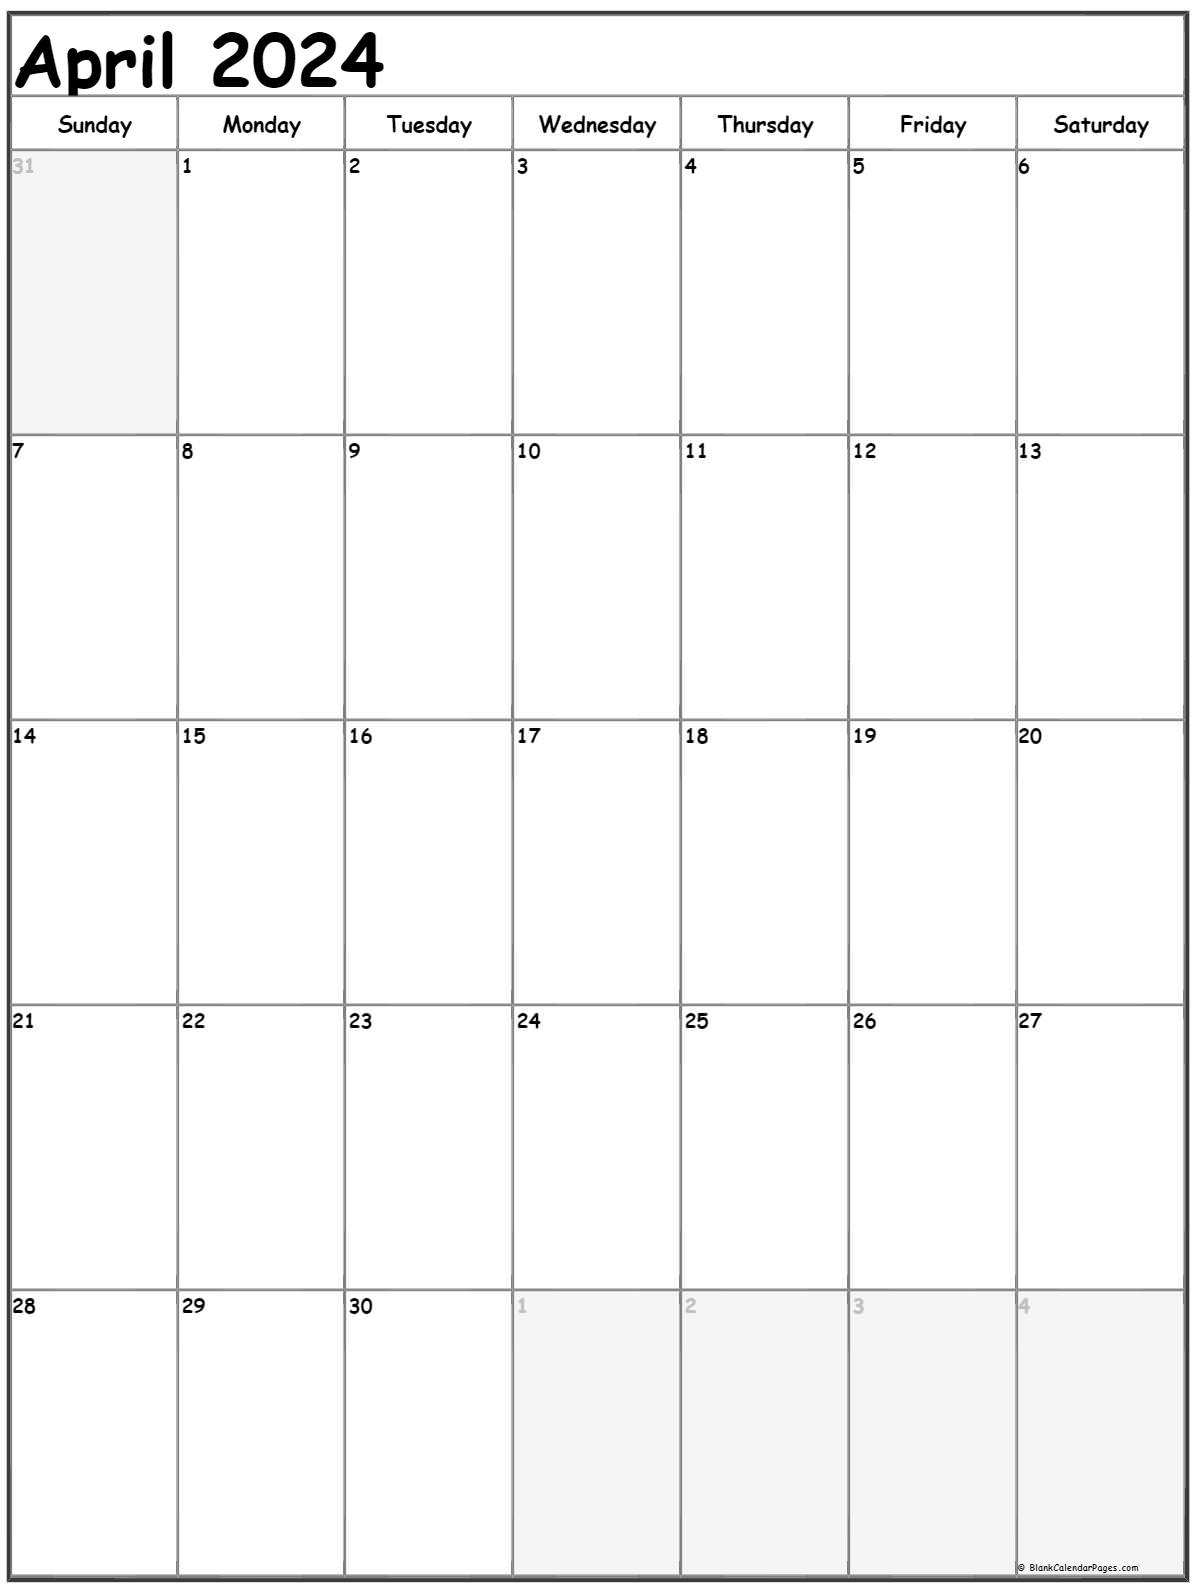 printable-april-calendar-2022-2023-printable-calendars-images-and